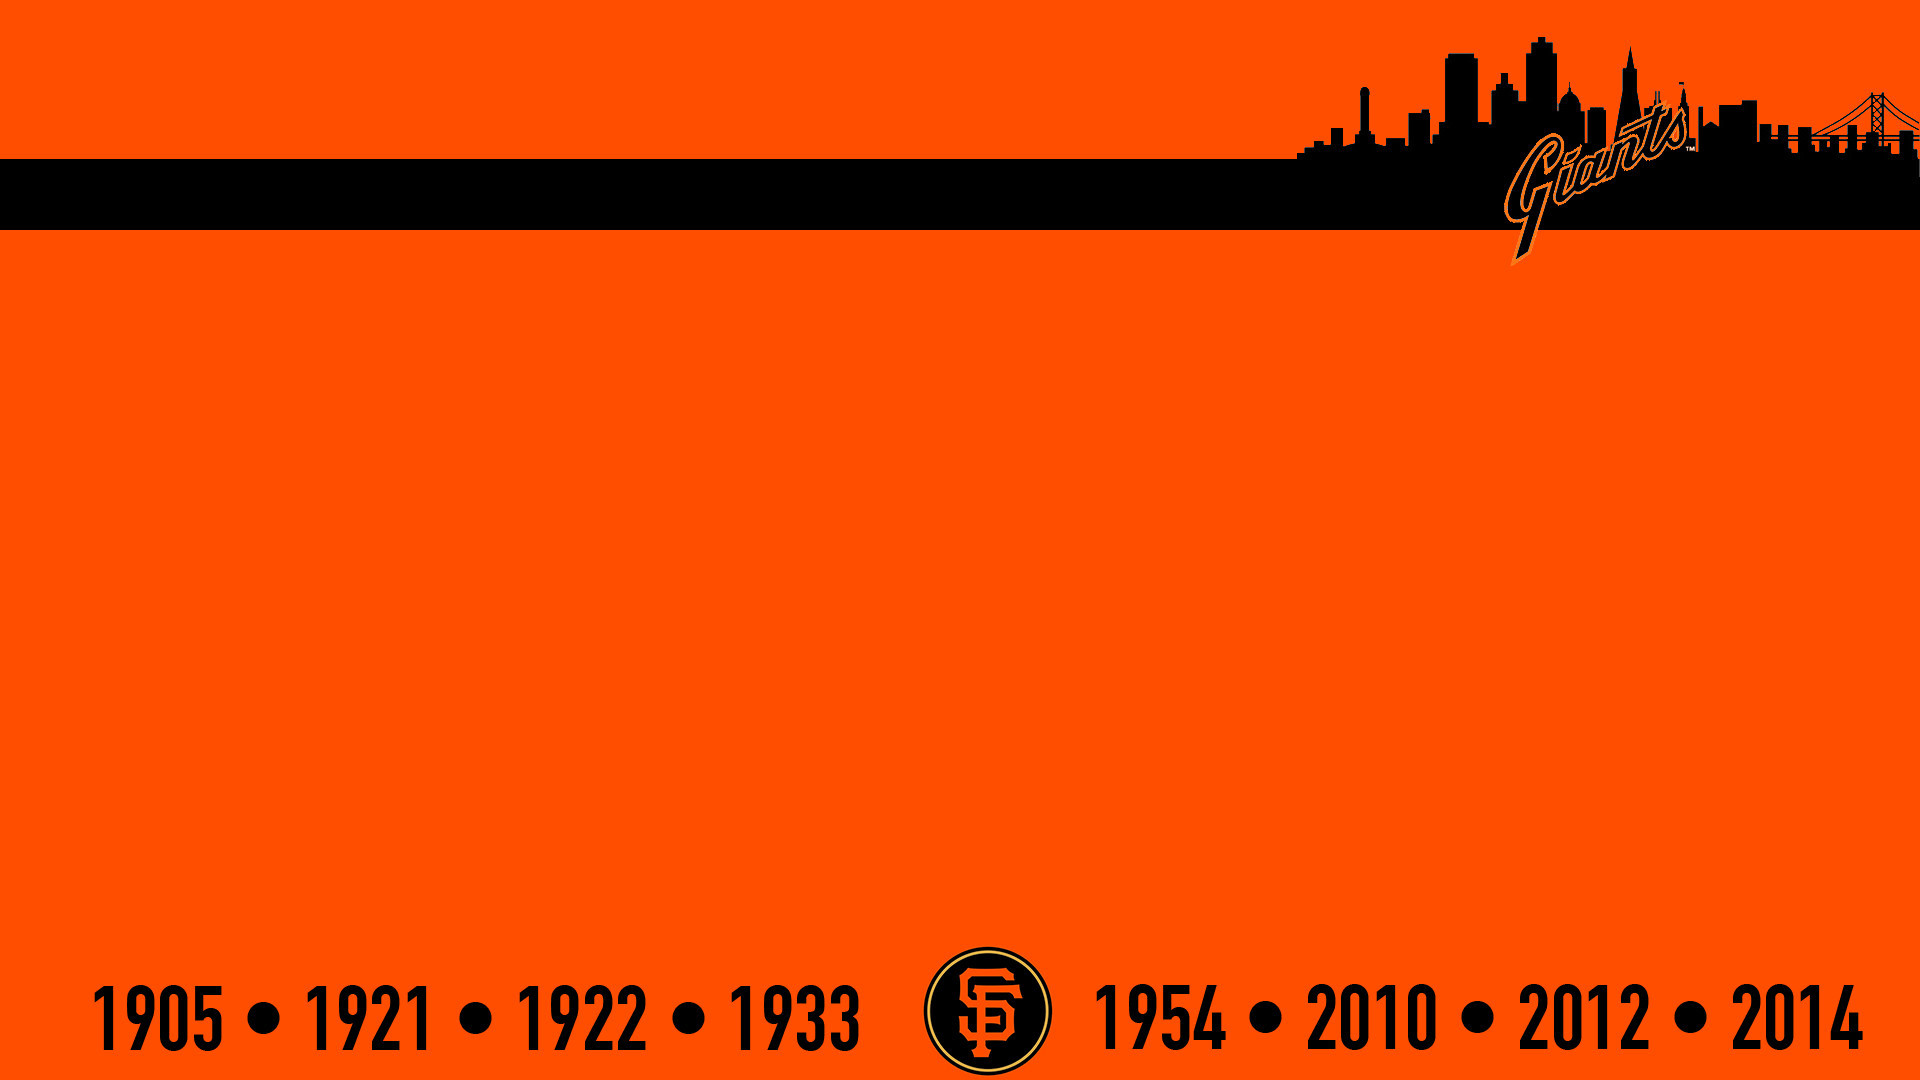 1920x1080, You Ll Get Great Images Of Your Favorite - San Francisco Giants Desktop - HD Wallpaper 